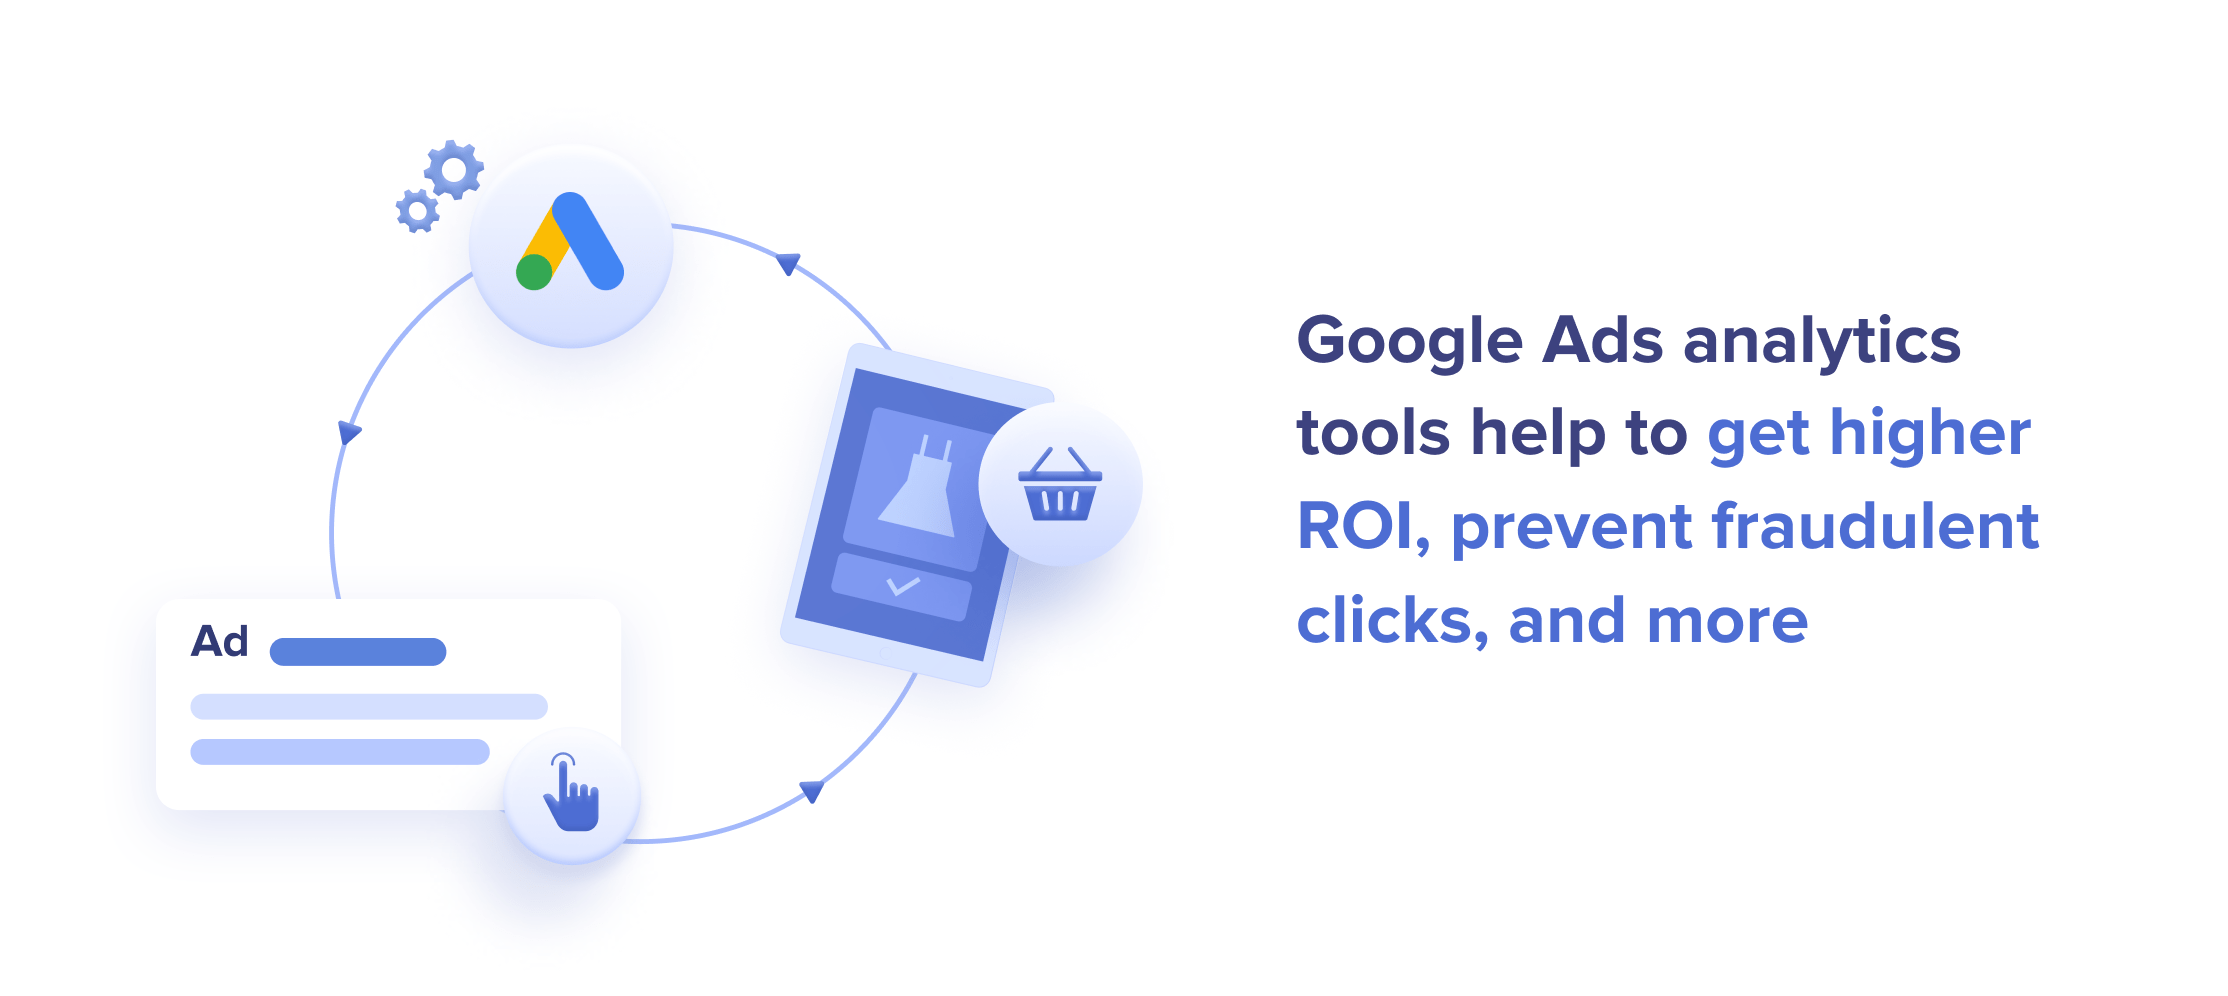 How Google Ads analytics tools help